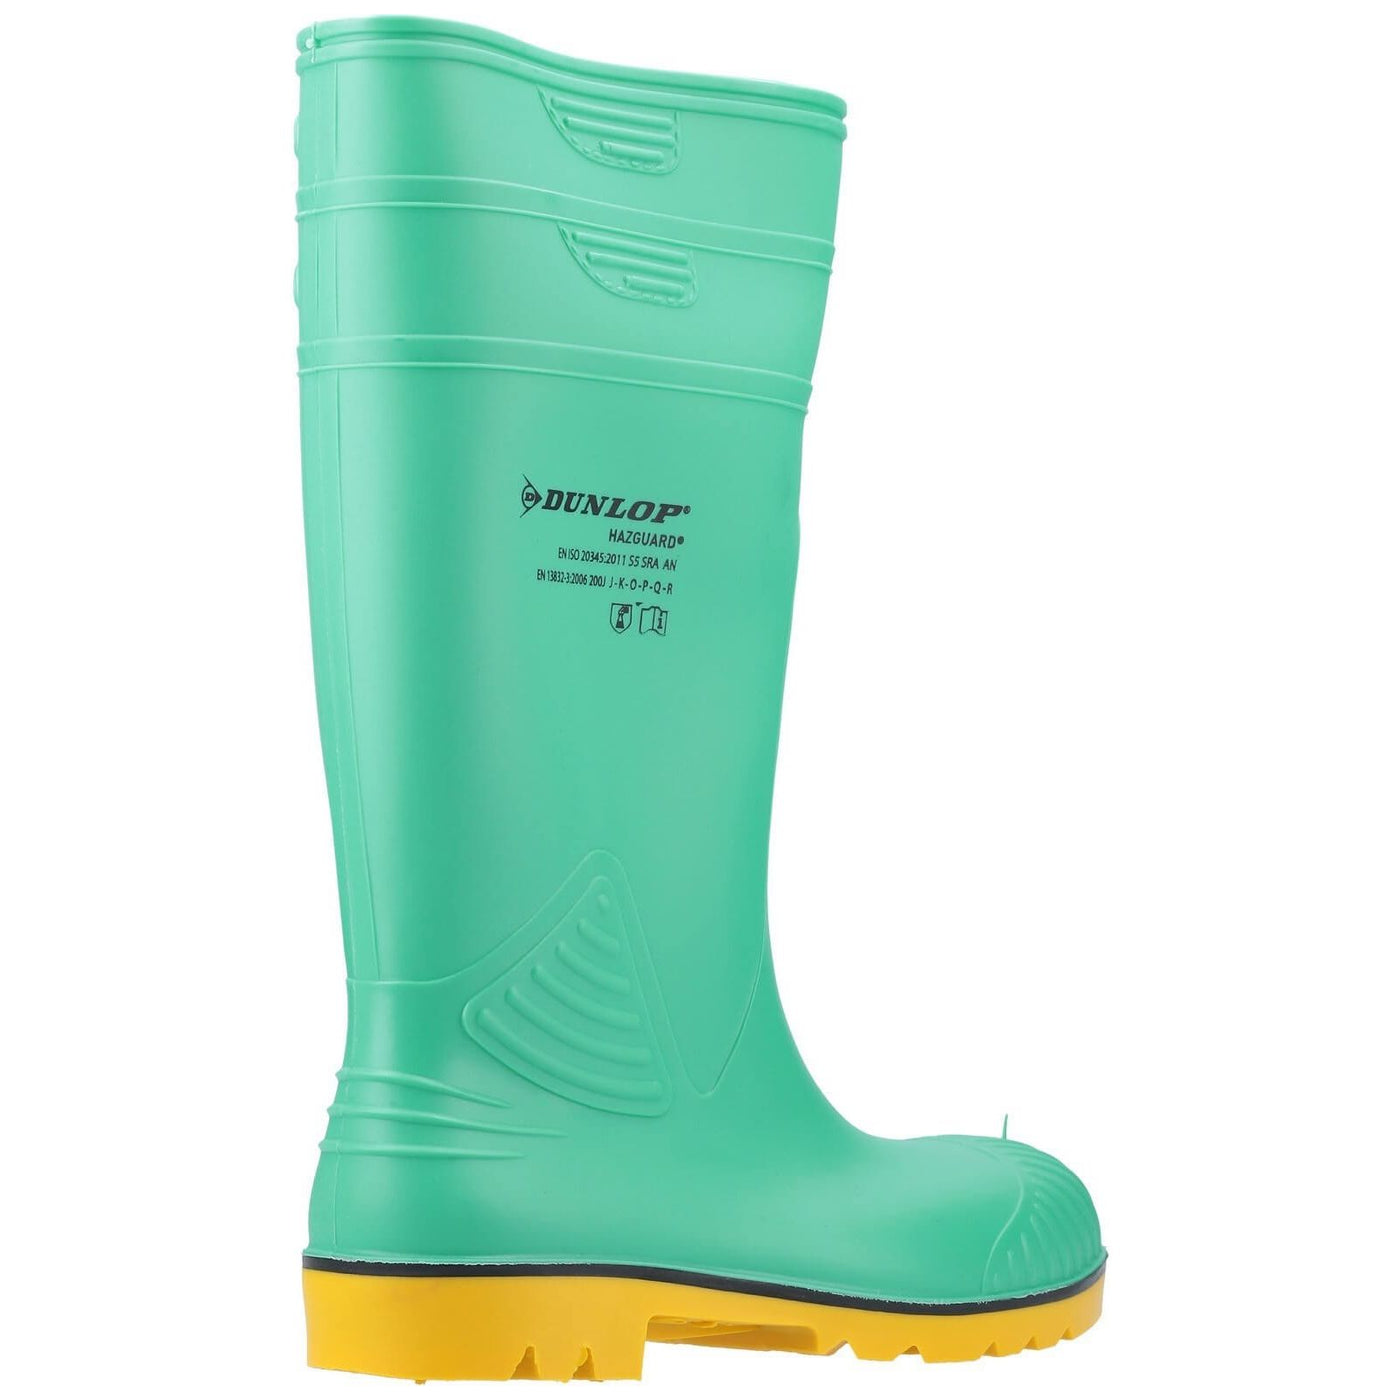 Dunlop Acifort HazGuard Safety Wellies-Green-Black-Yellow-2